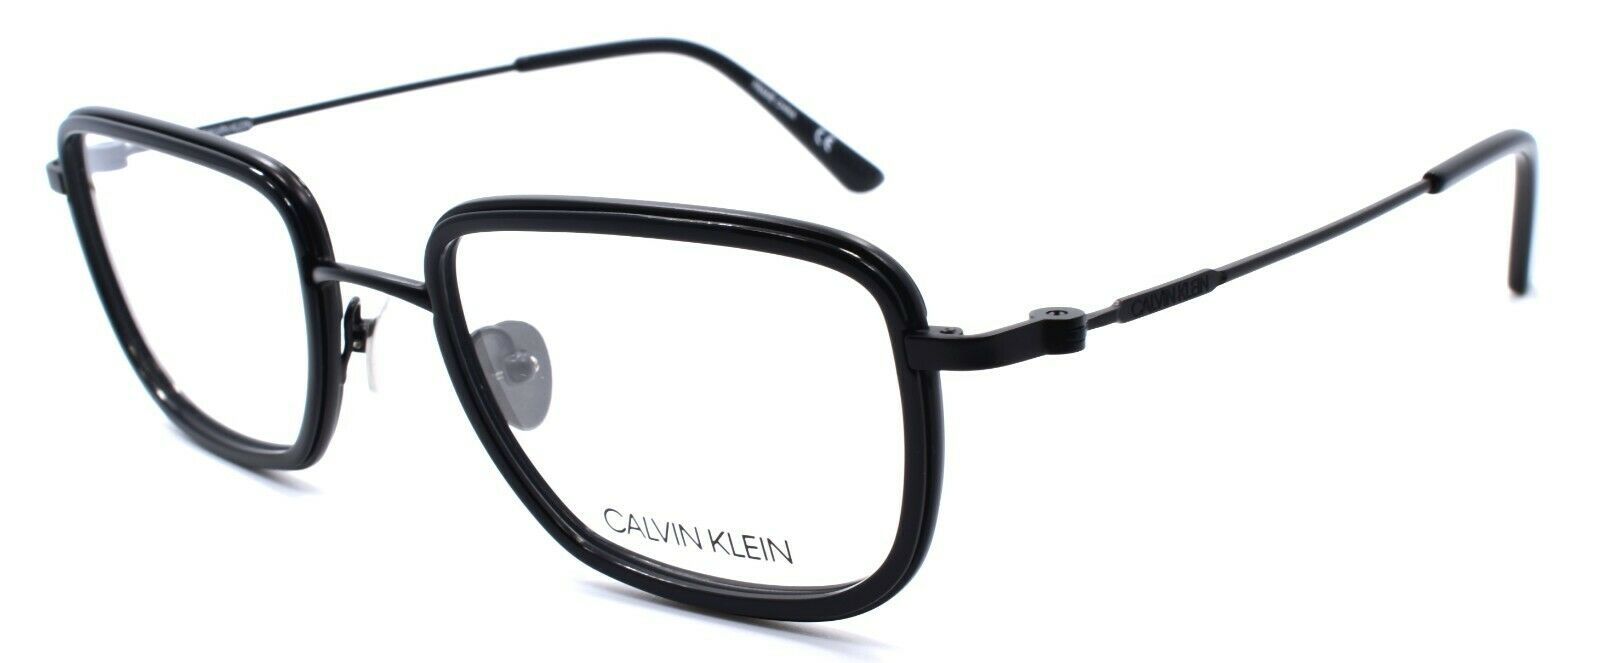 1-Calvin Klein CK20107 001 Men's Eyeglasses Frames Titanium 54-21-145 Black-883901125825-IKSpecs